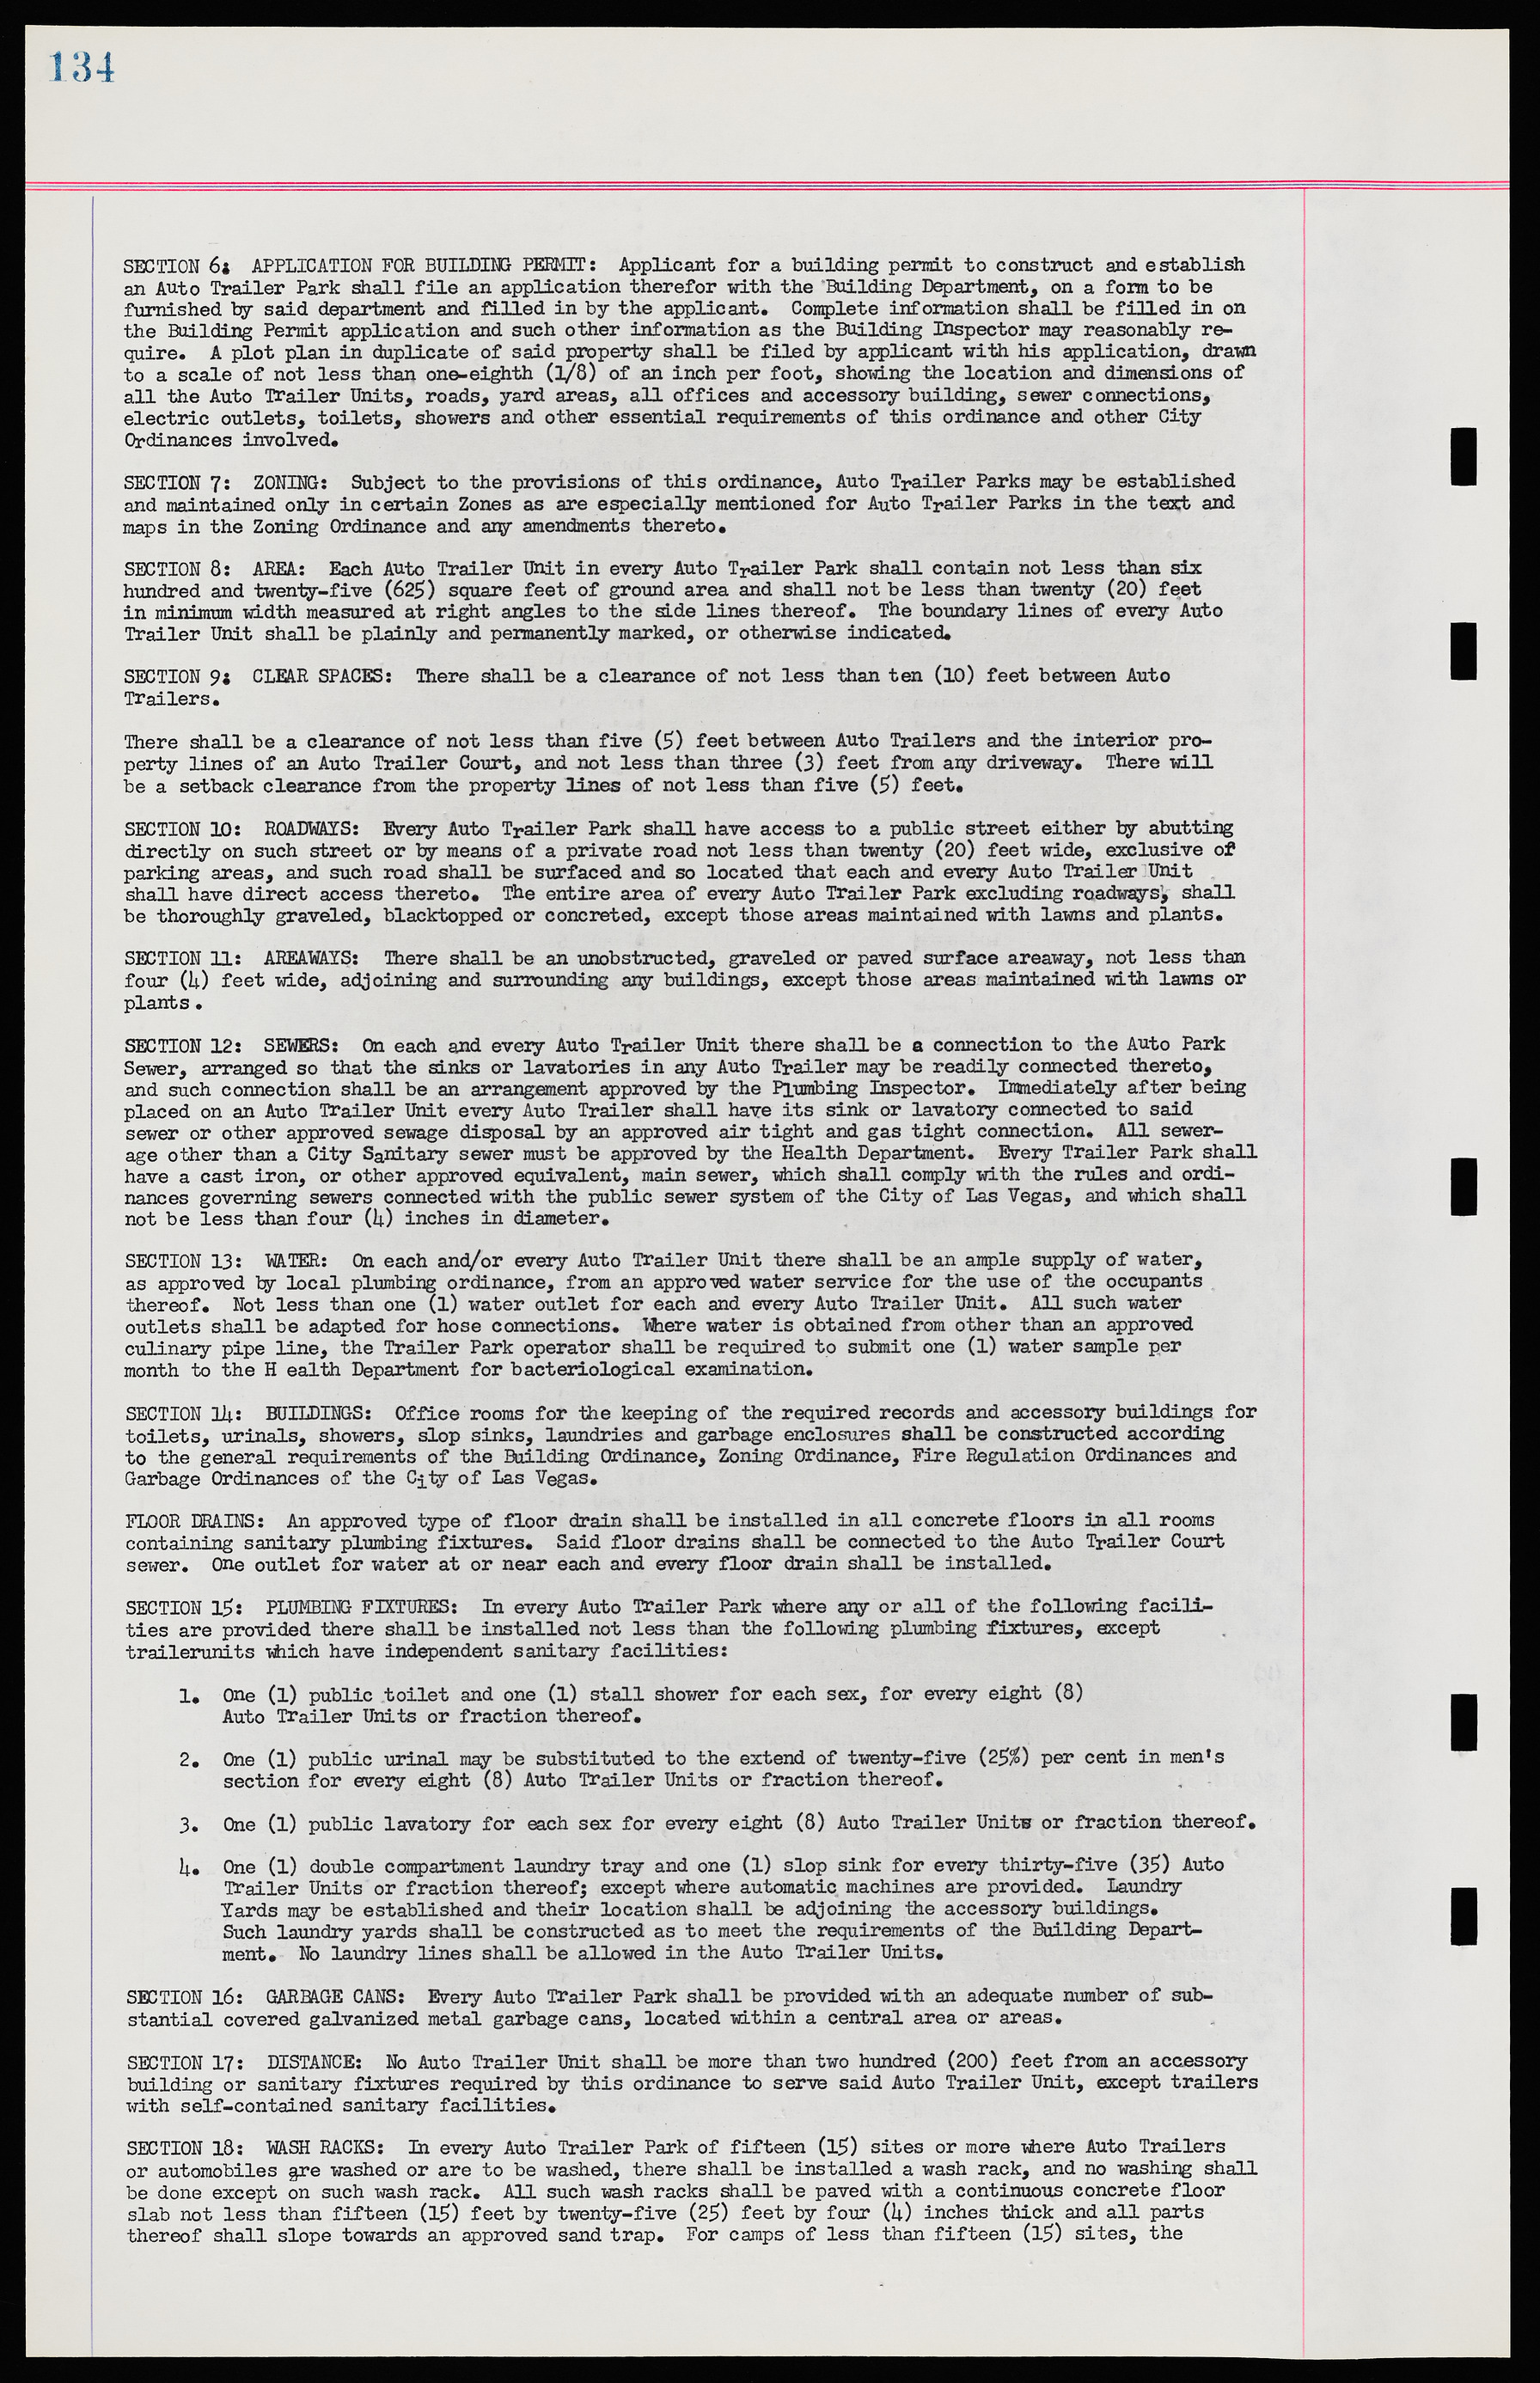 Las Vegas City Ordinances, November 13, 1950 to August 6, 1958, lvc000015-142